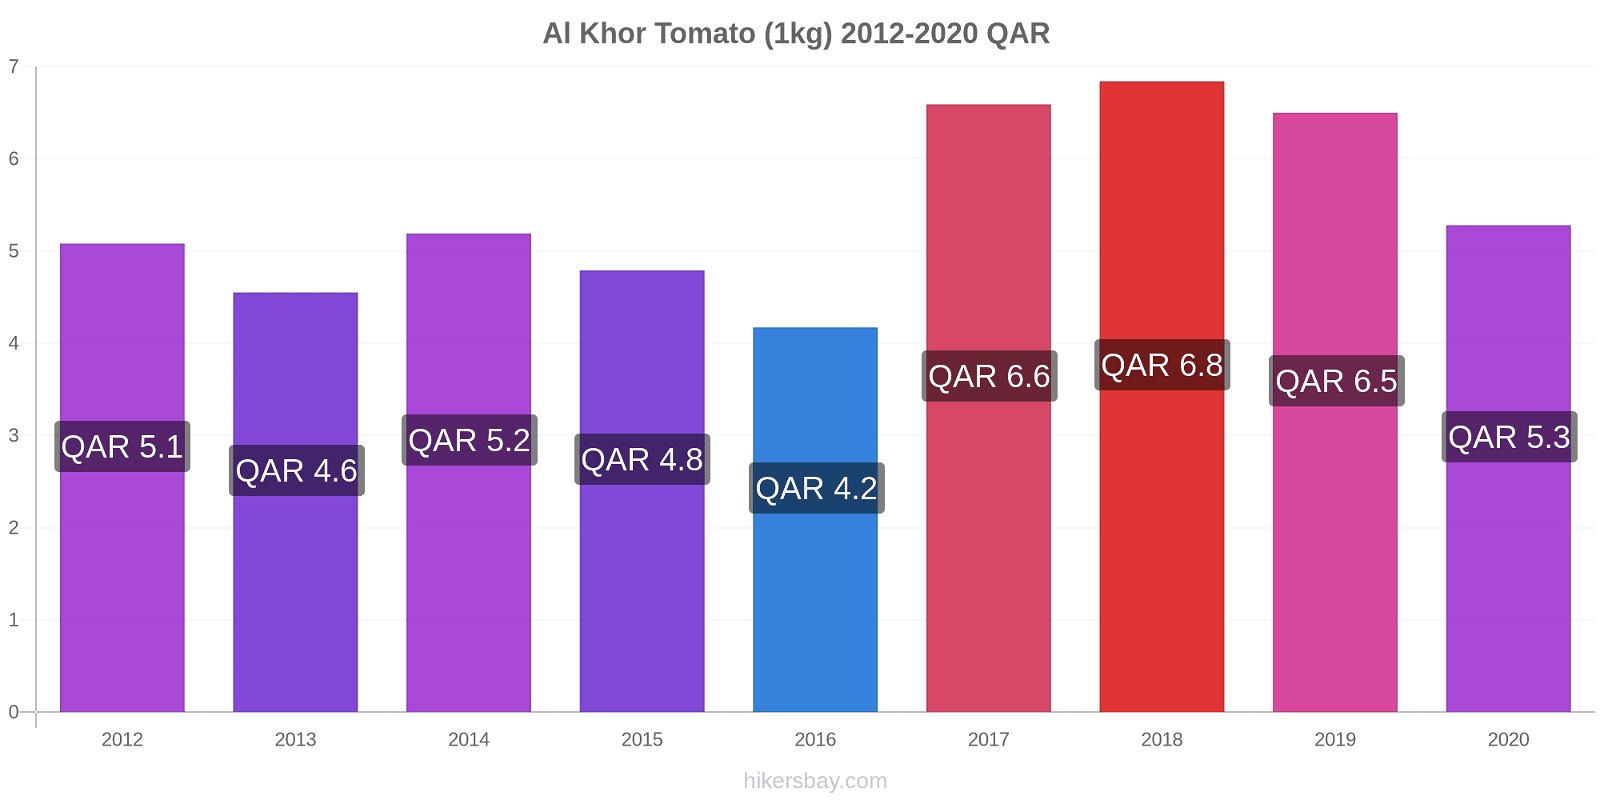 Al Khor price changes Tomato (1kg) hikersbay.com